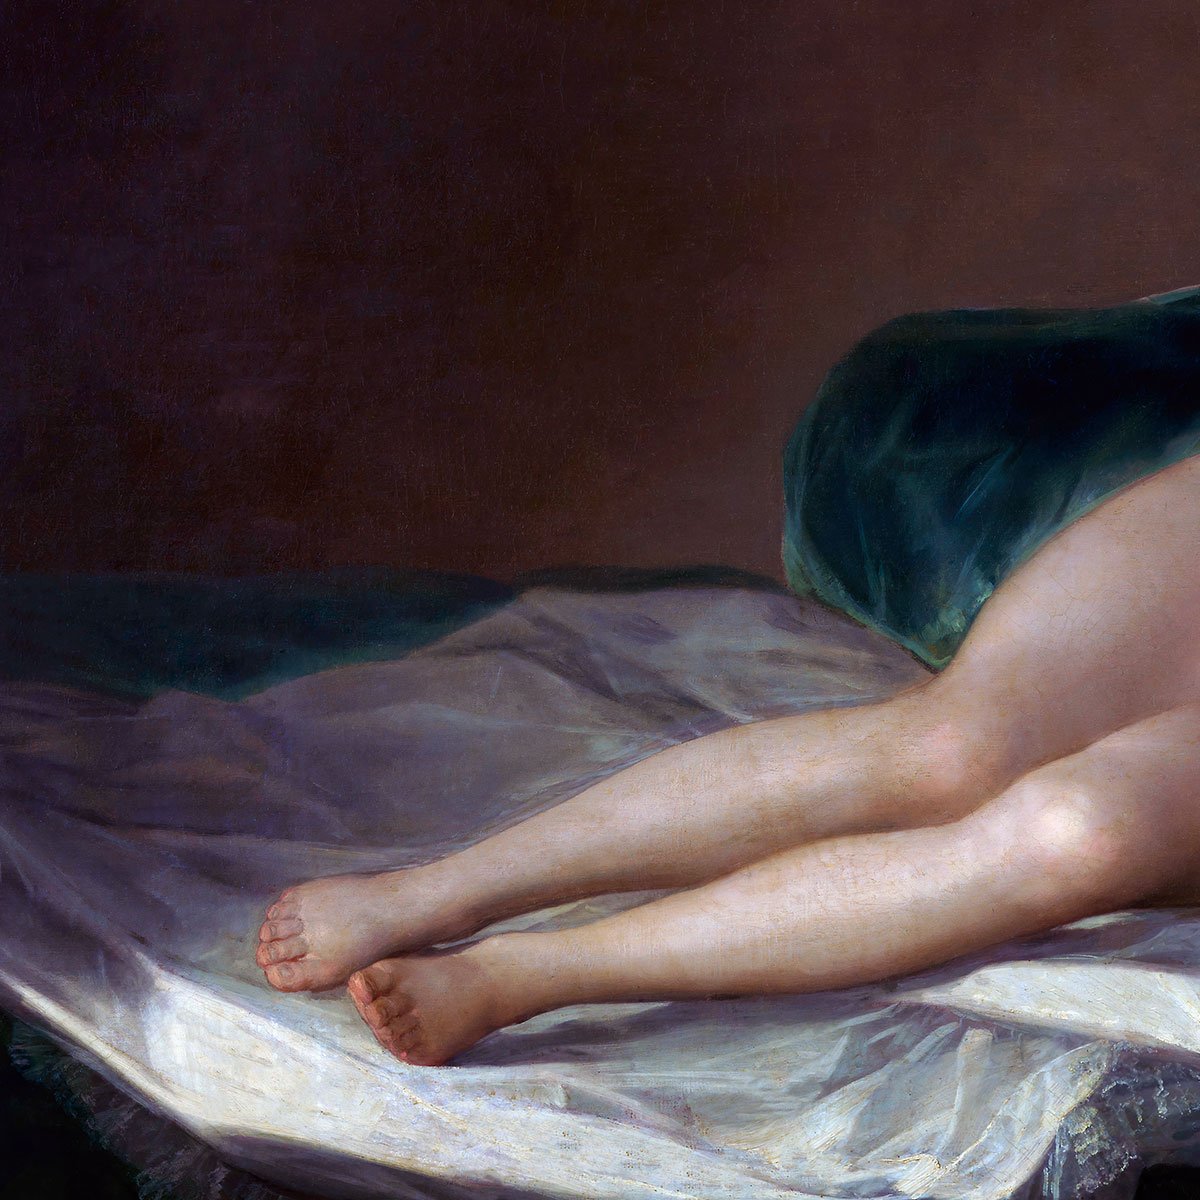 La Maja Denuda by Francisco de Goya